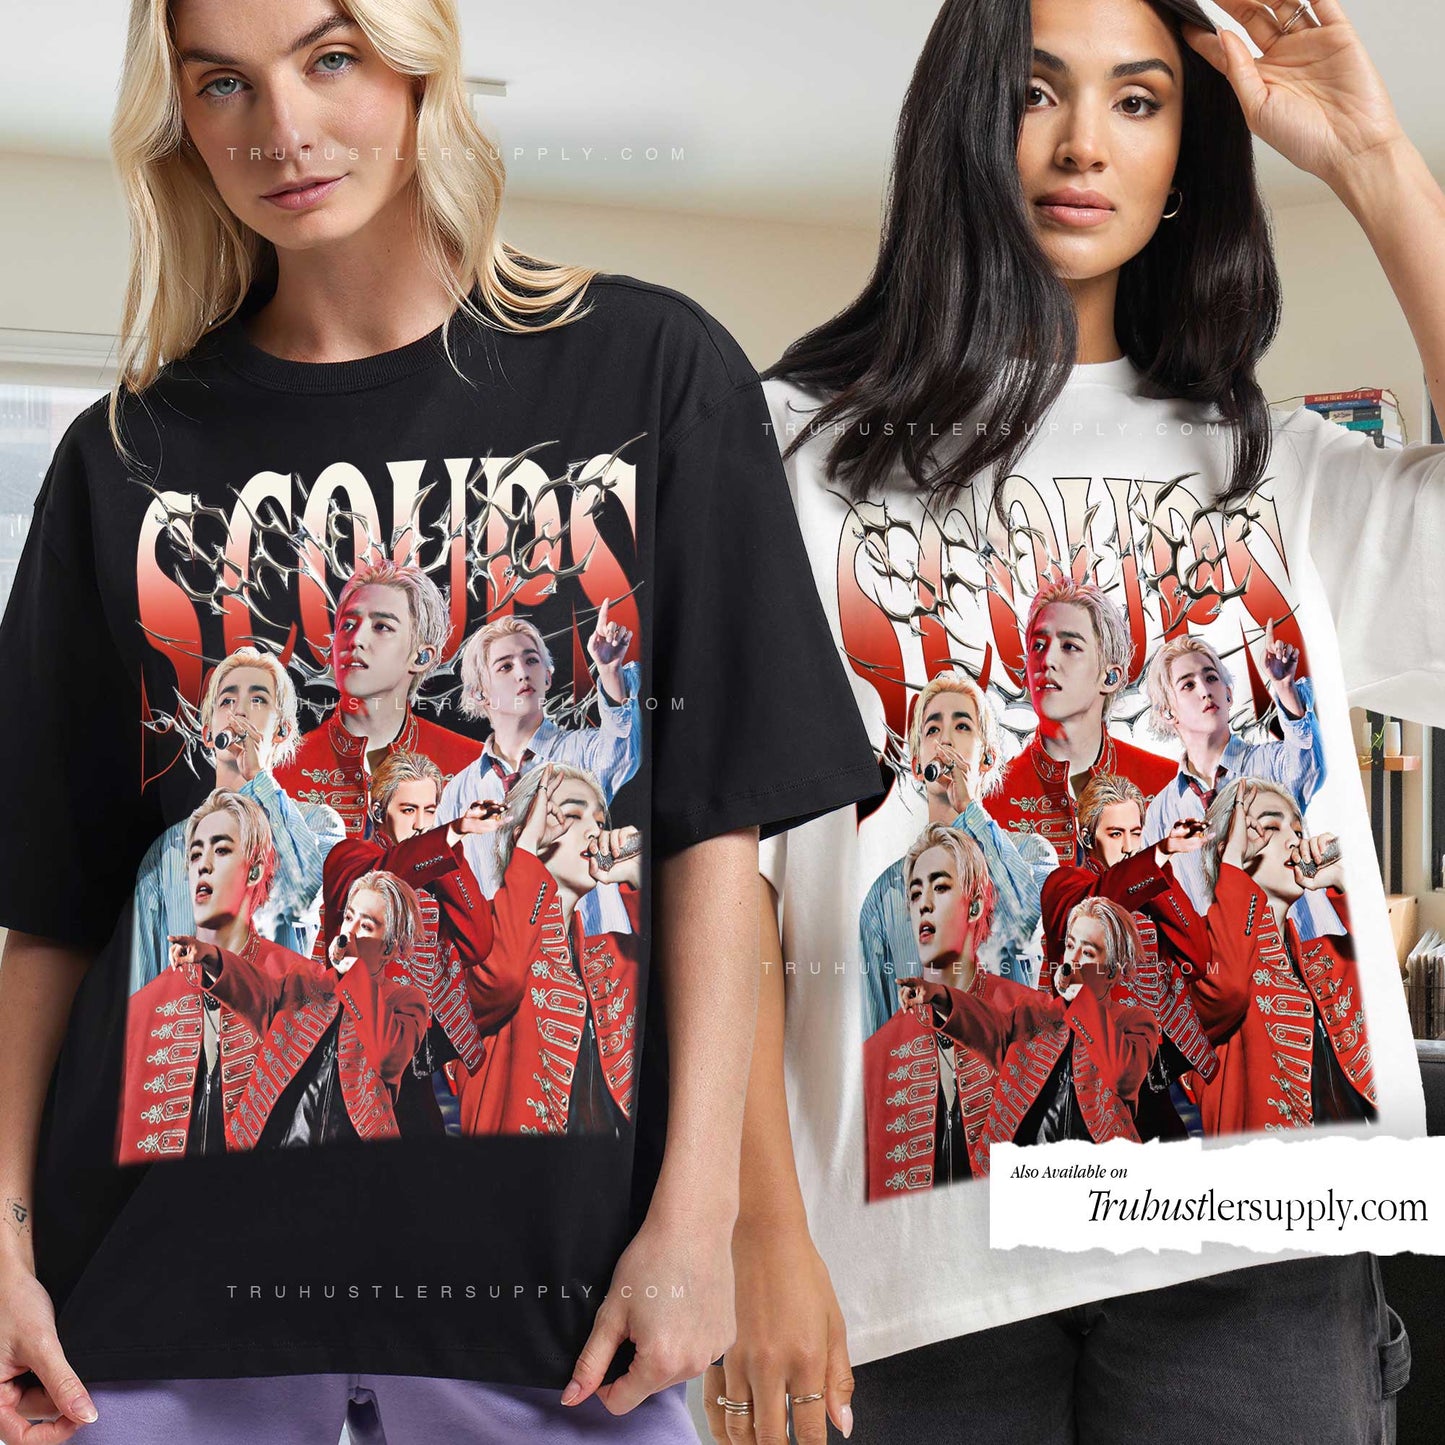 S.Coups Seventeen Bootleg Graphic T Shirt